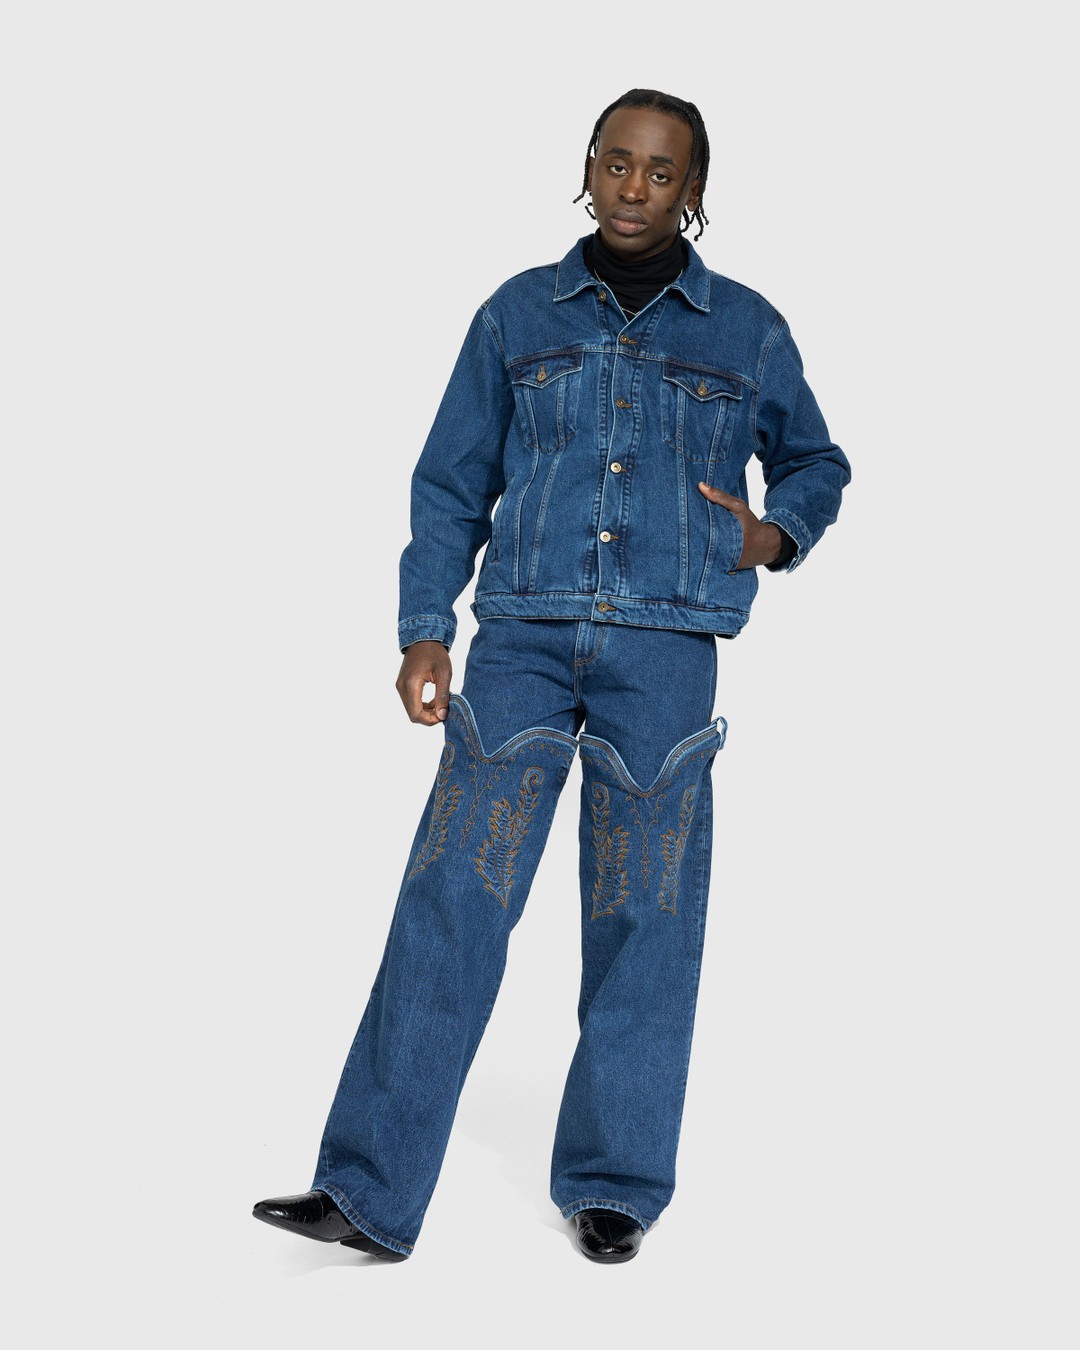 Y/Project – Classic Maxi Cowboy Cuff Jeans Navy | Highsnobiety Shop